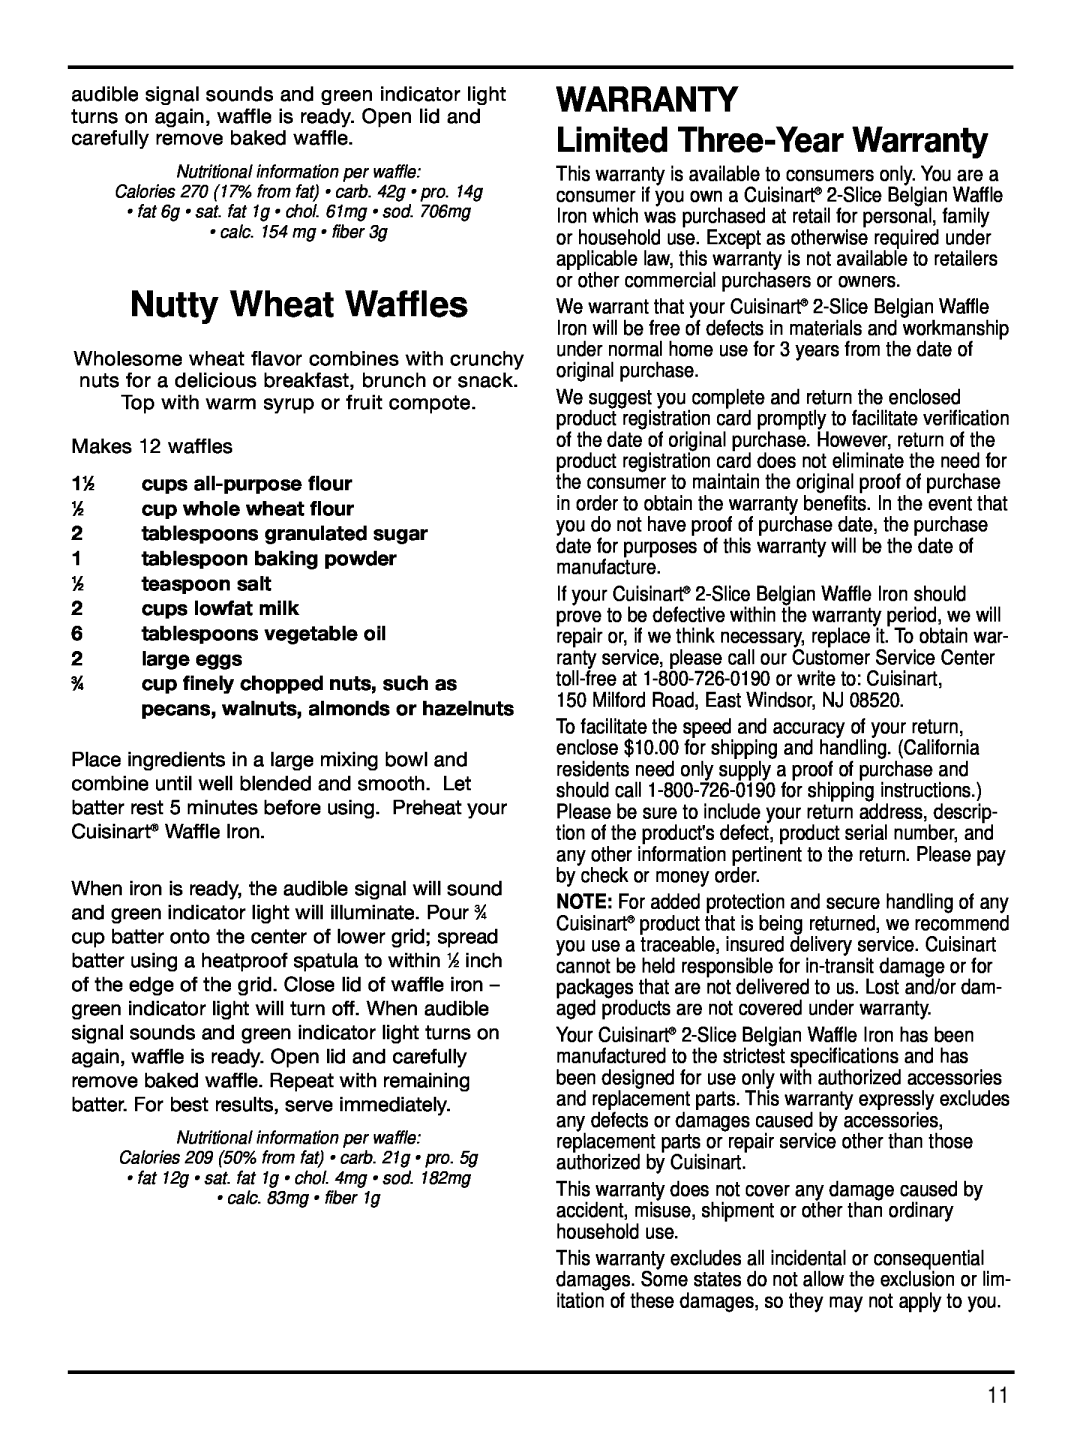 Cuisinart WAF-2B manual Nutty Wheat Waffles, WARRANTY Limited Three-YearWarranty, 11⁄2cups all-purposeflour, 2large eggs 